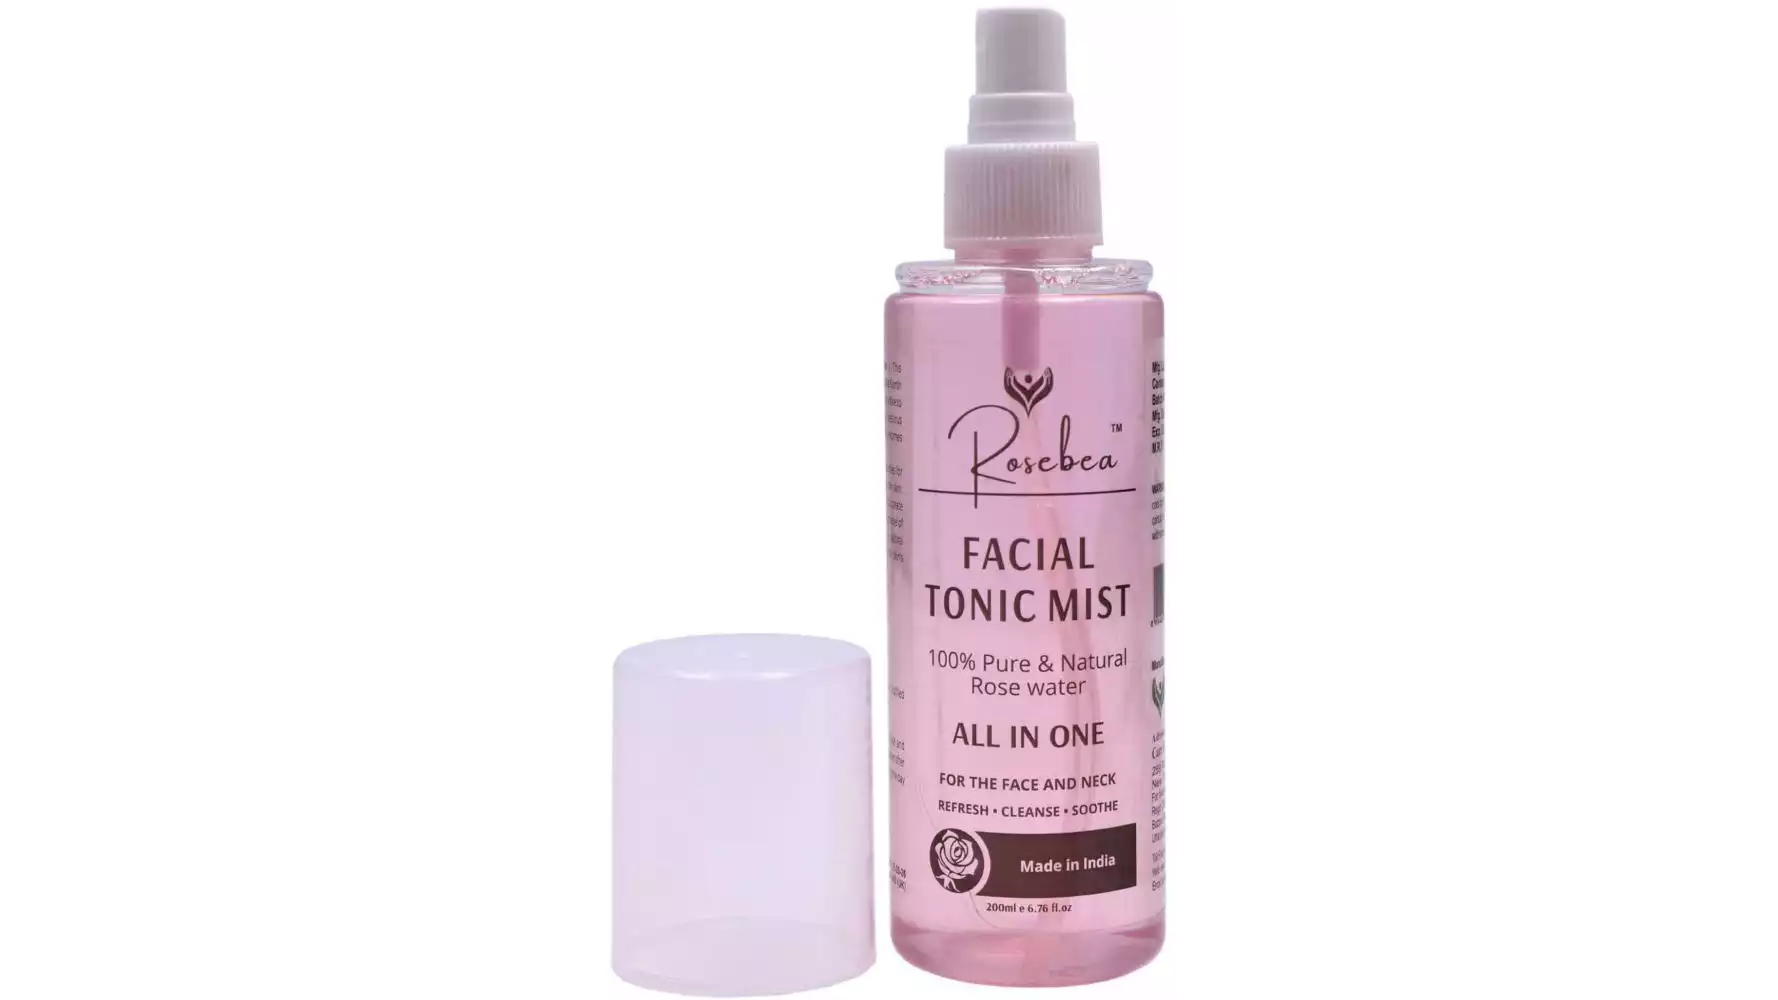 Care Us Rosebea Facial Tonic Mist (200ml)